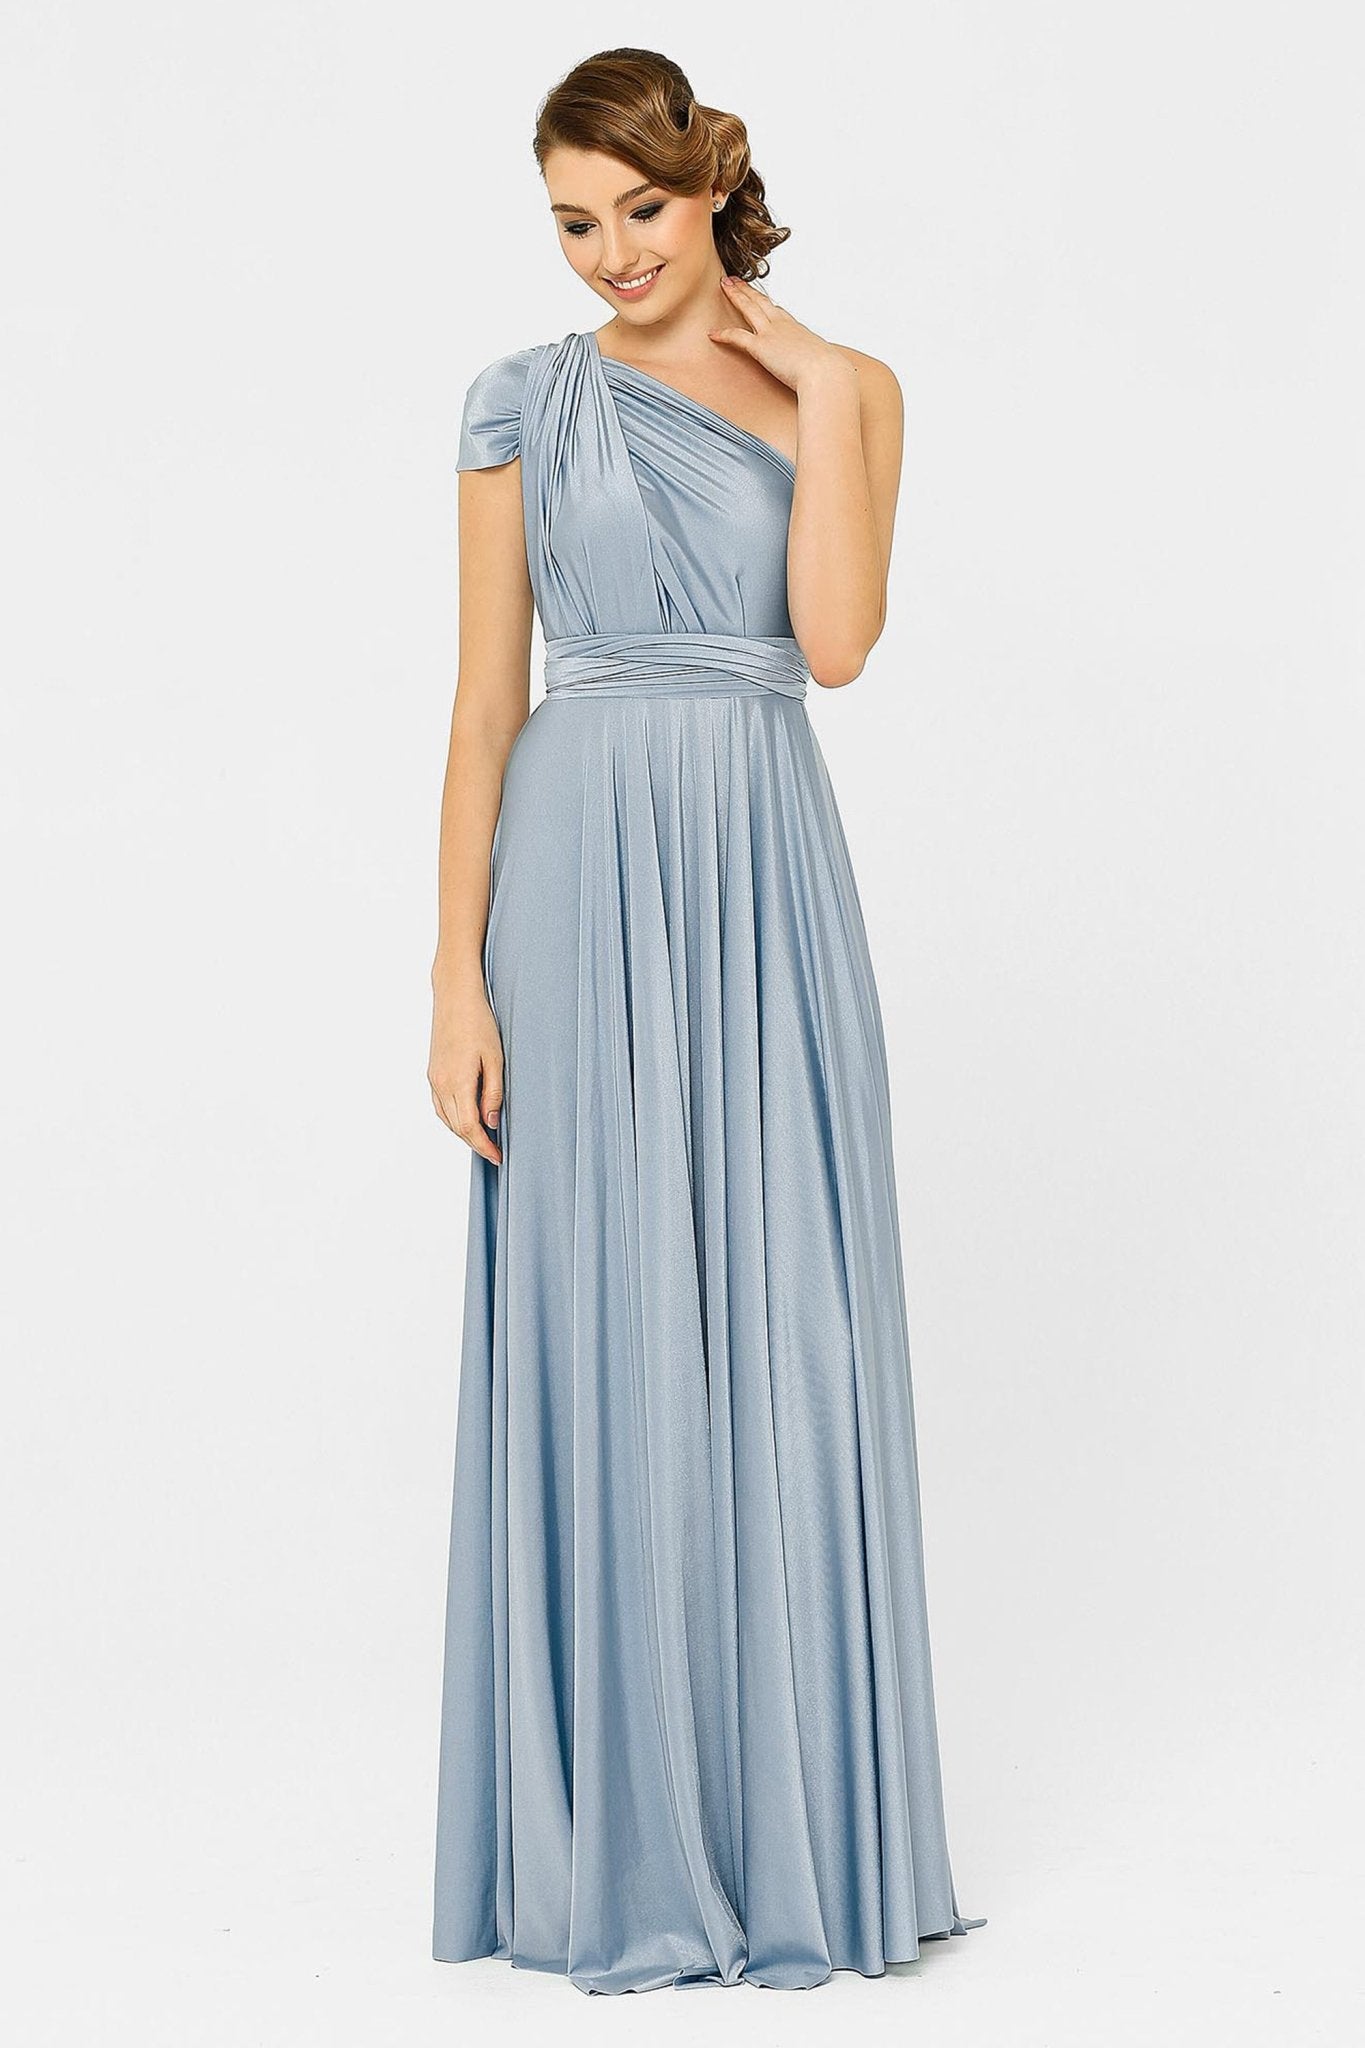 20+ Blue Grey Bridesmaid Dresses